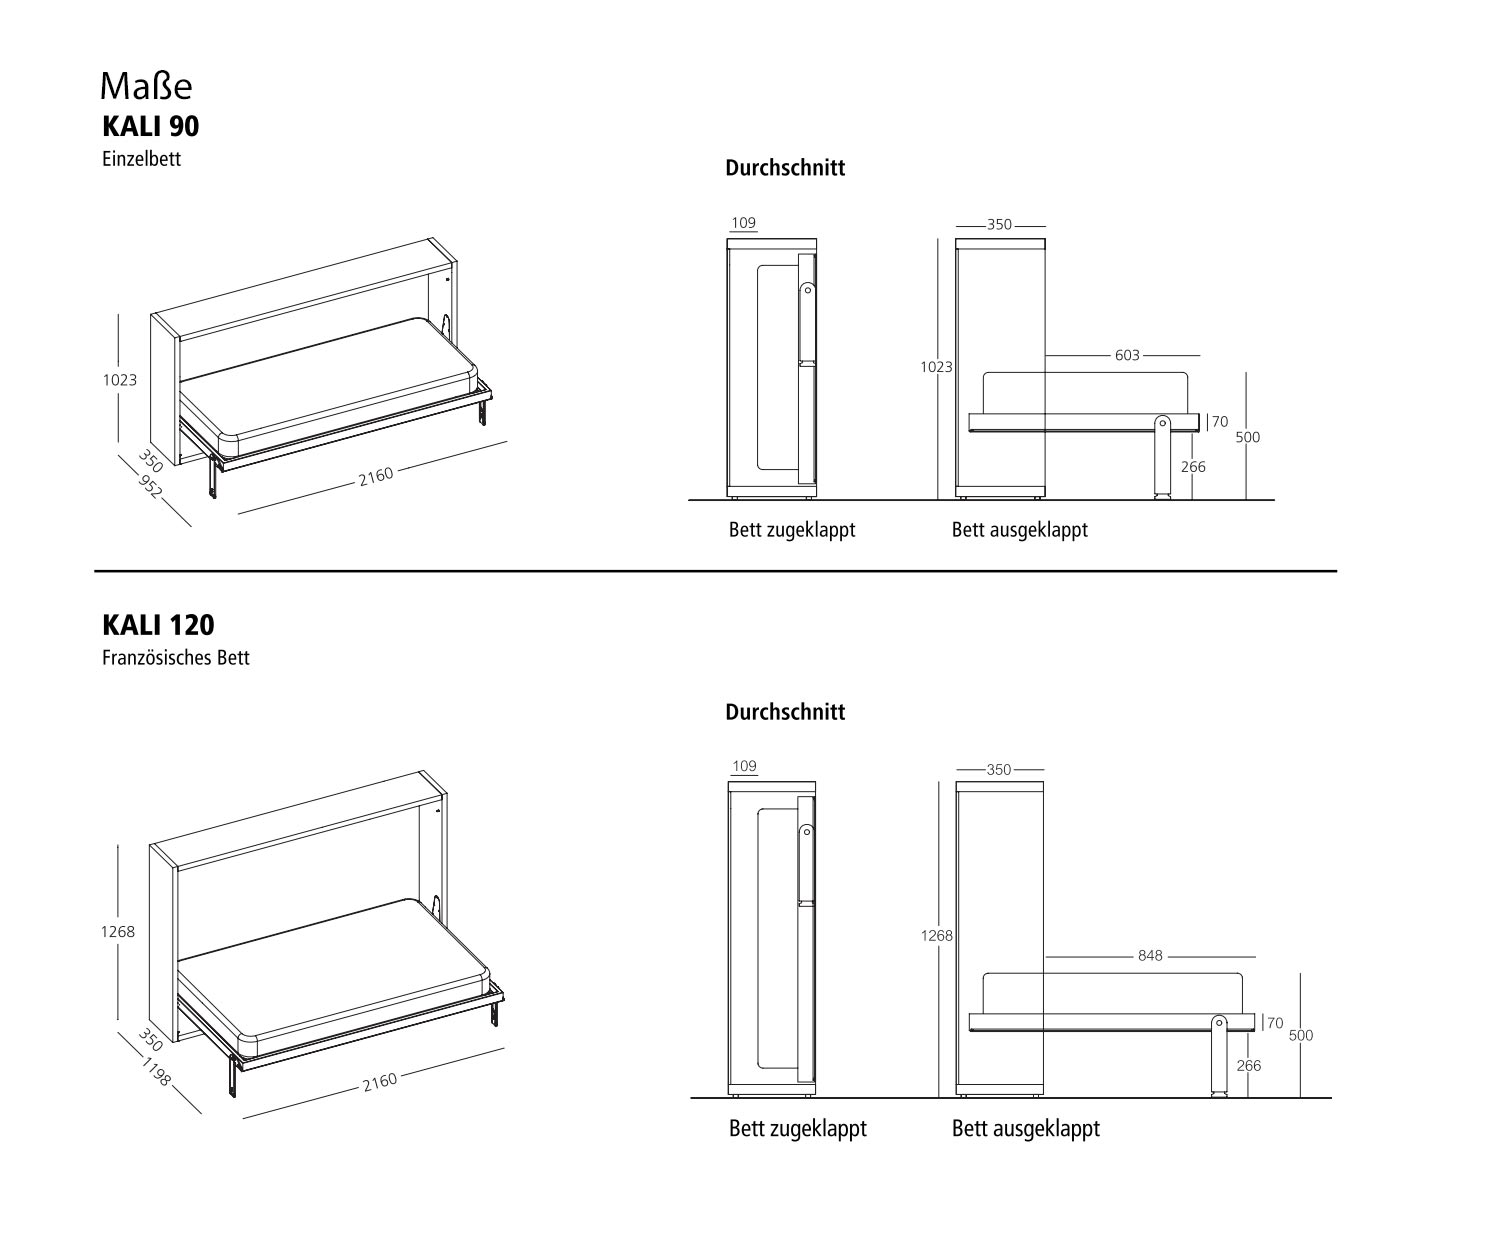 Clei Kali 90/120 design foldaway bed sketch dimensions